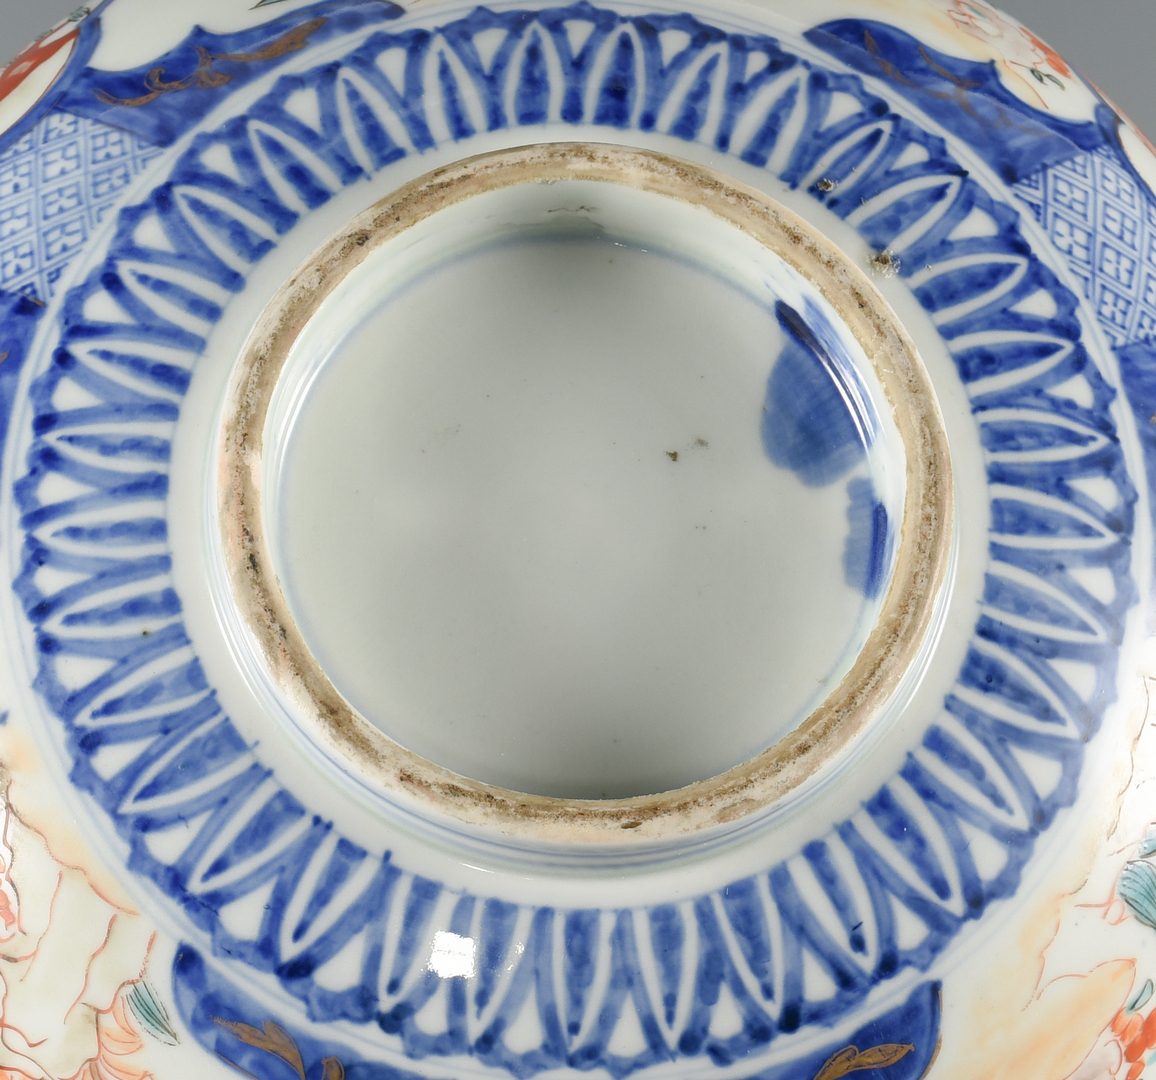 Lot 32: Imari Porcelain Punch Bowl, 19th C.